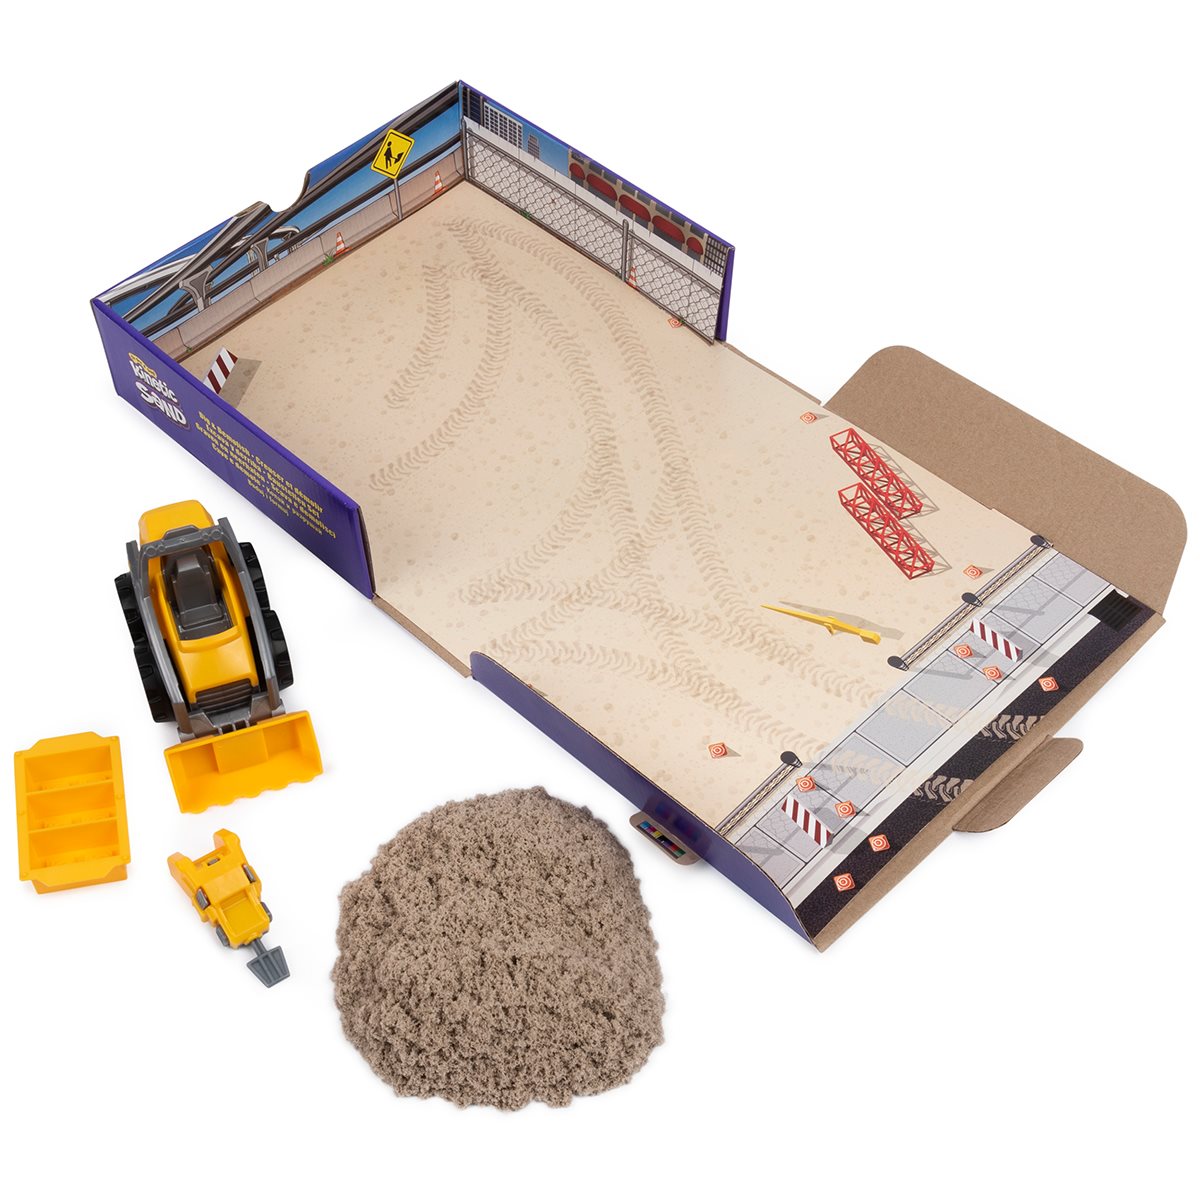 Dig & Demolish Truck Kinetic Sand Set - Fun Stuff Toys